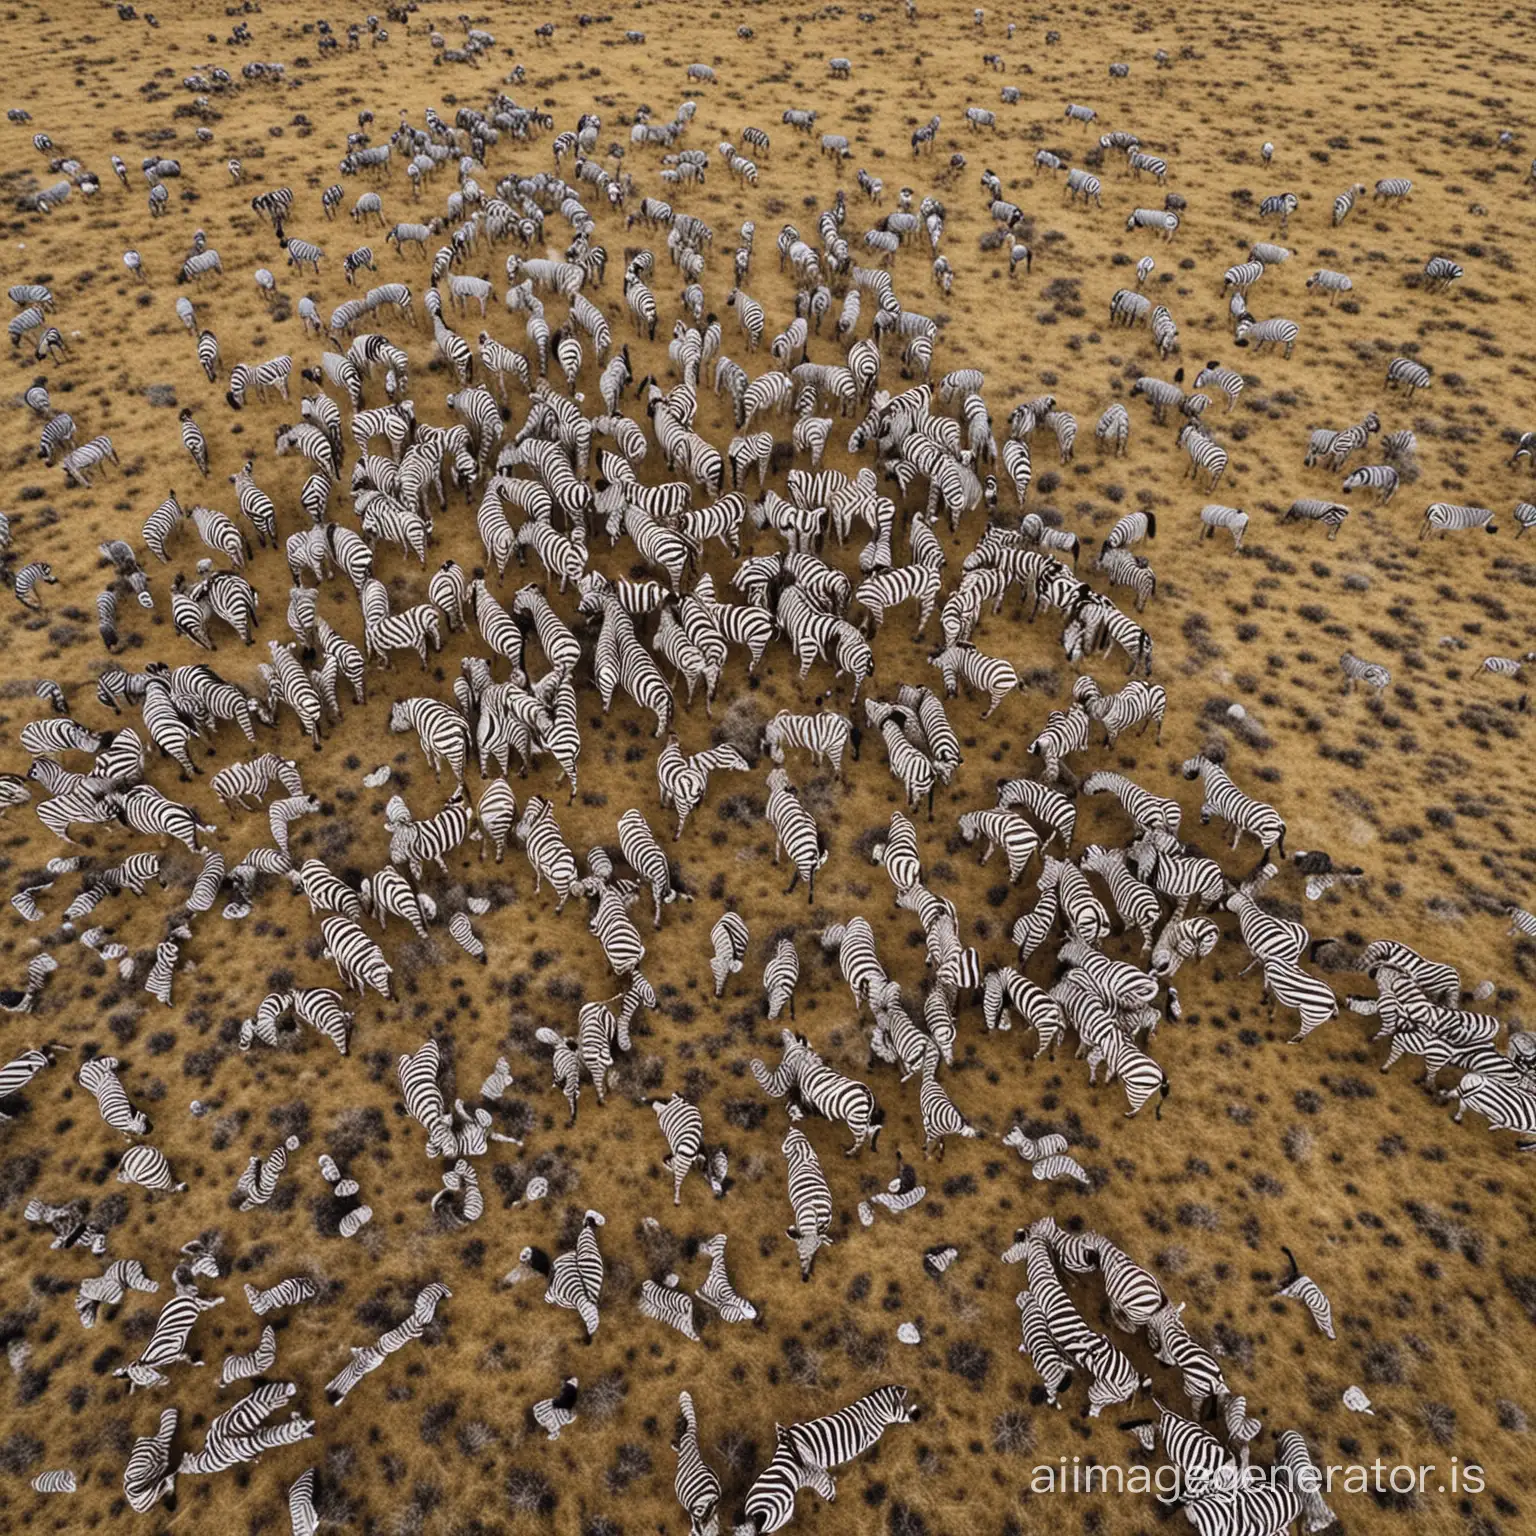 Aerial-View-of-Zebras-Roaming-the-Vast-Savanna